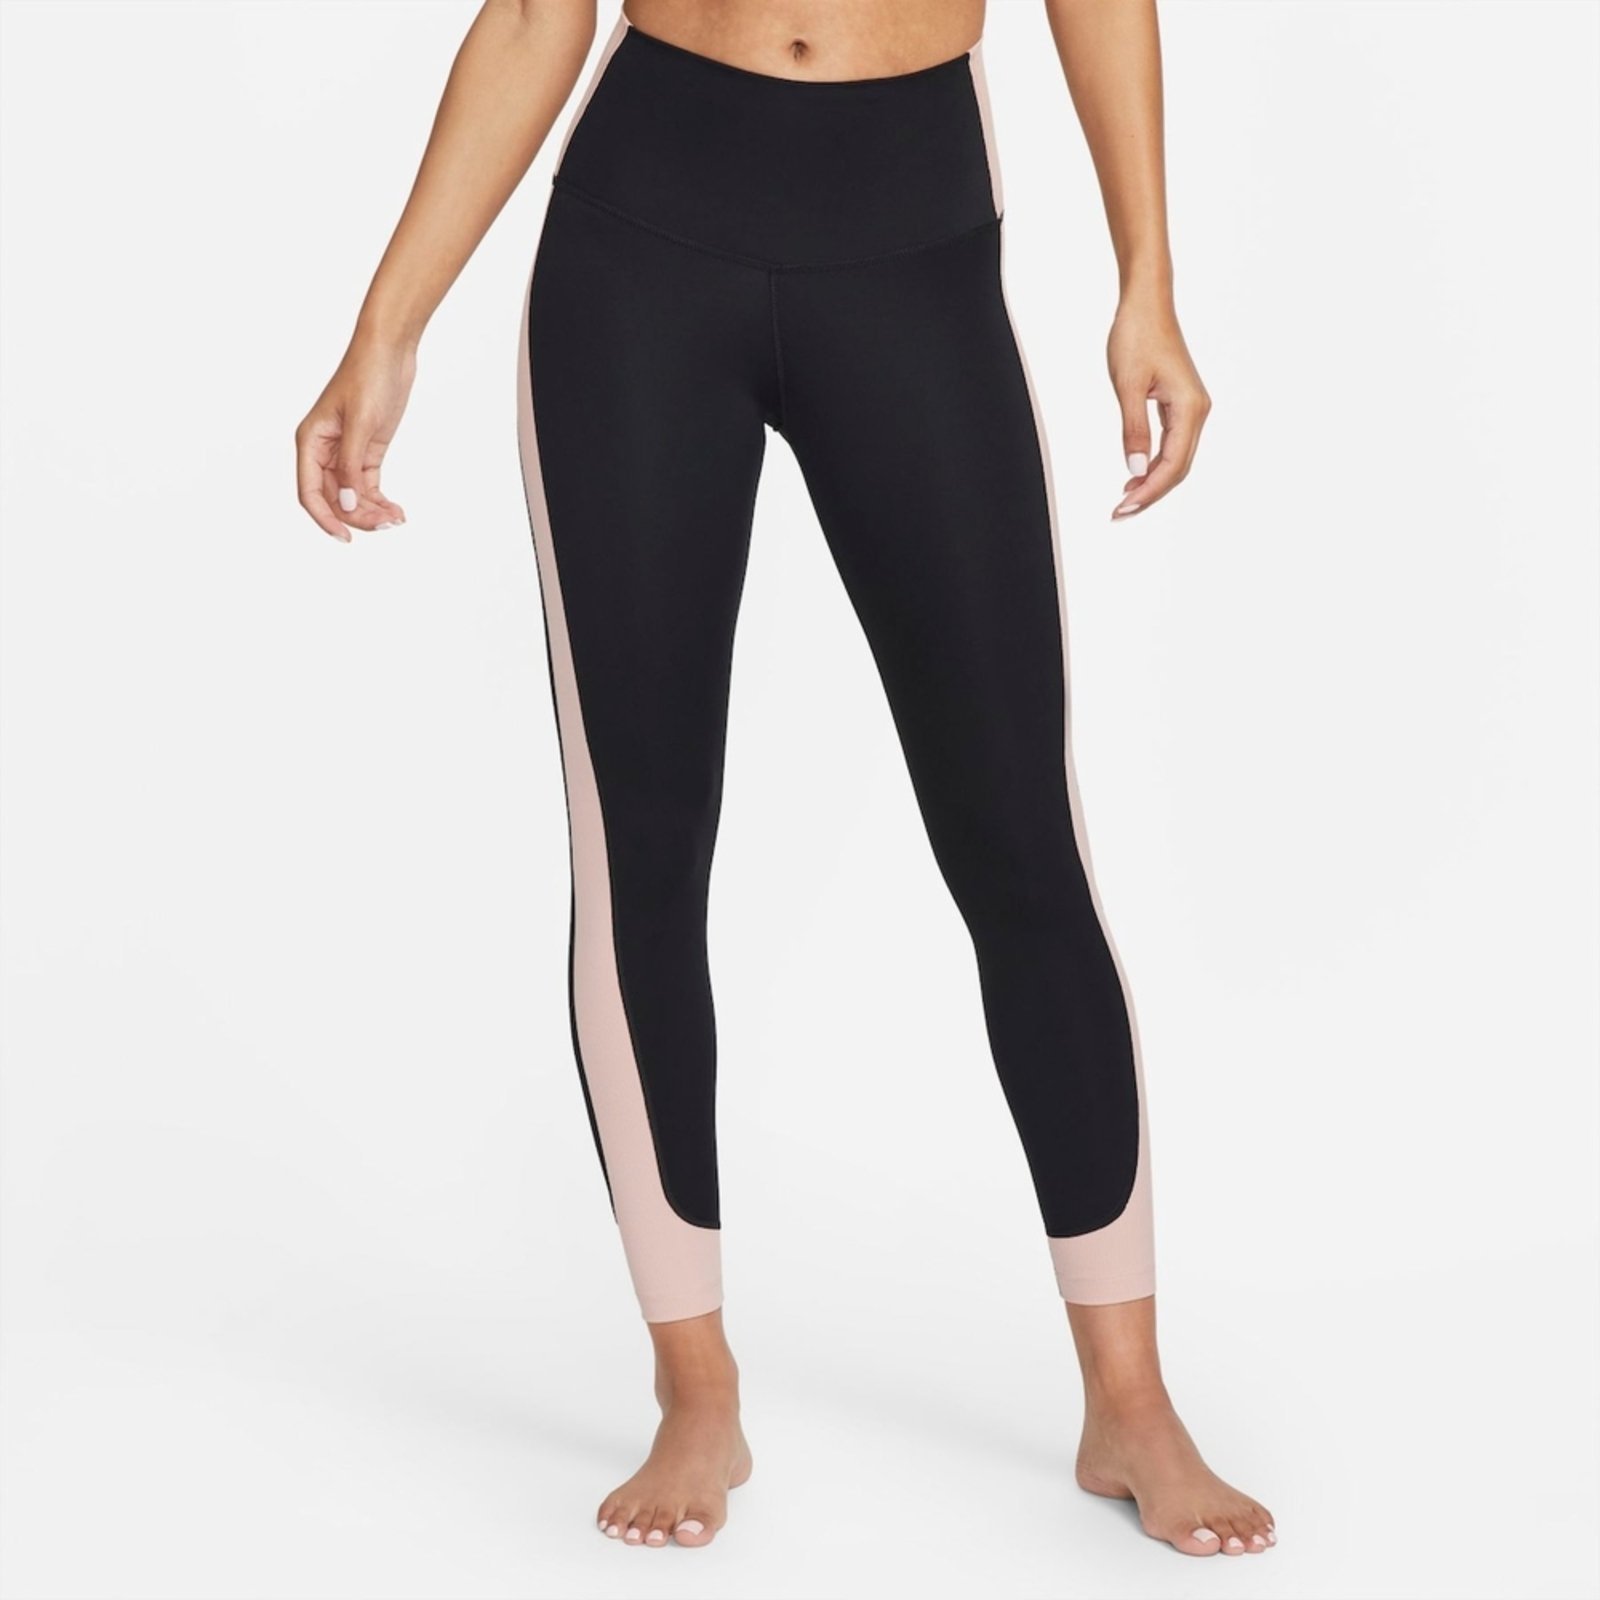 Legging Nike Yoga Dri-FIT Feminina - Compre Agora